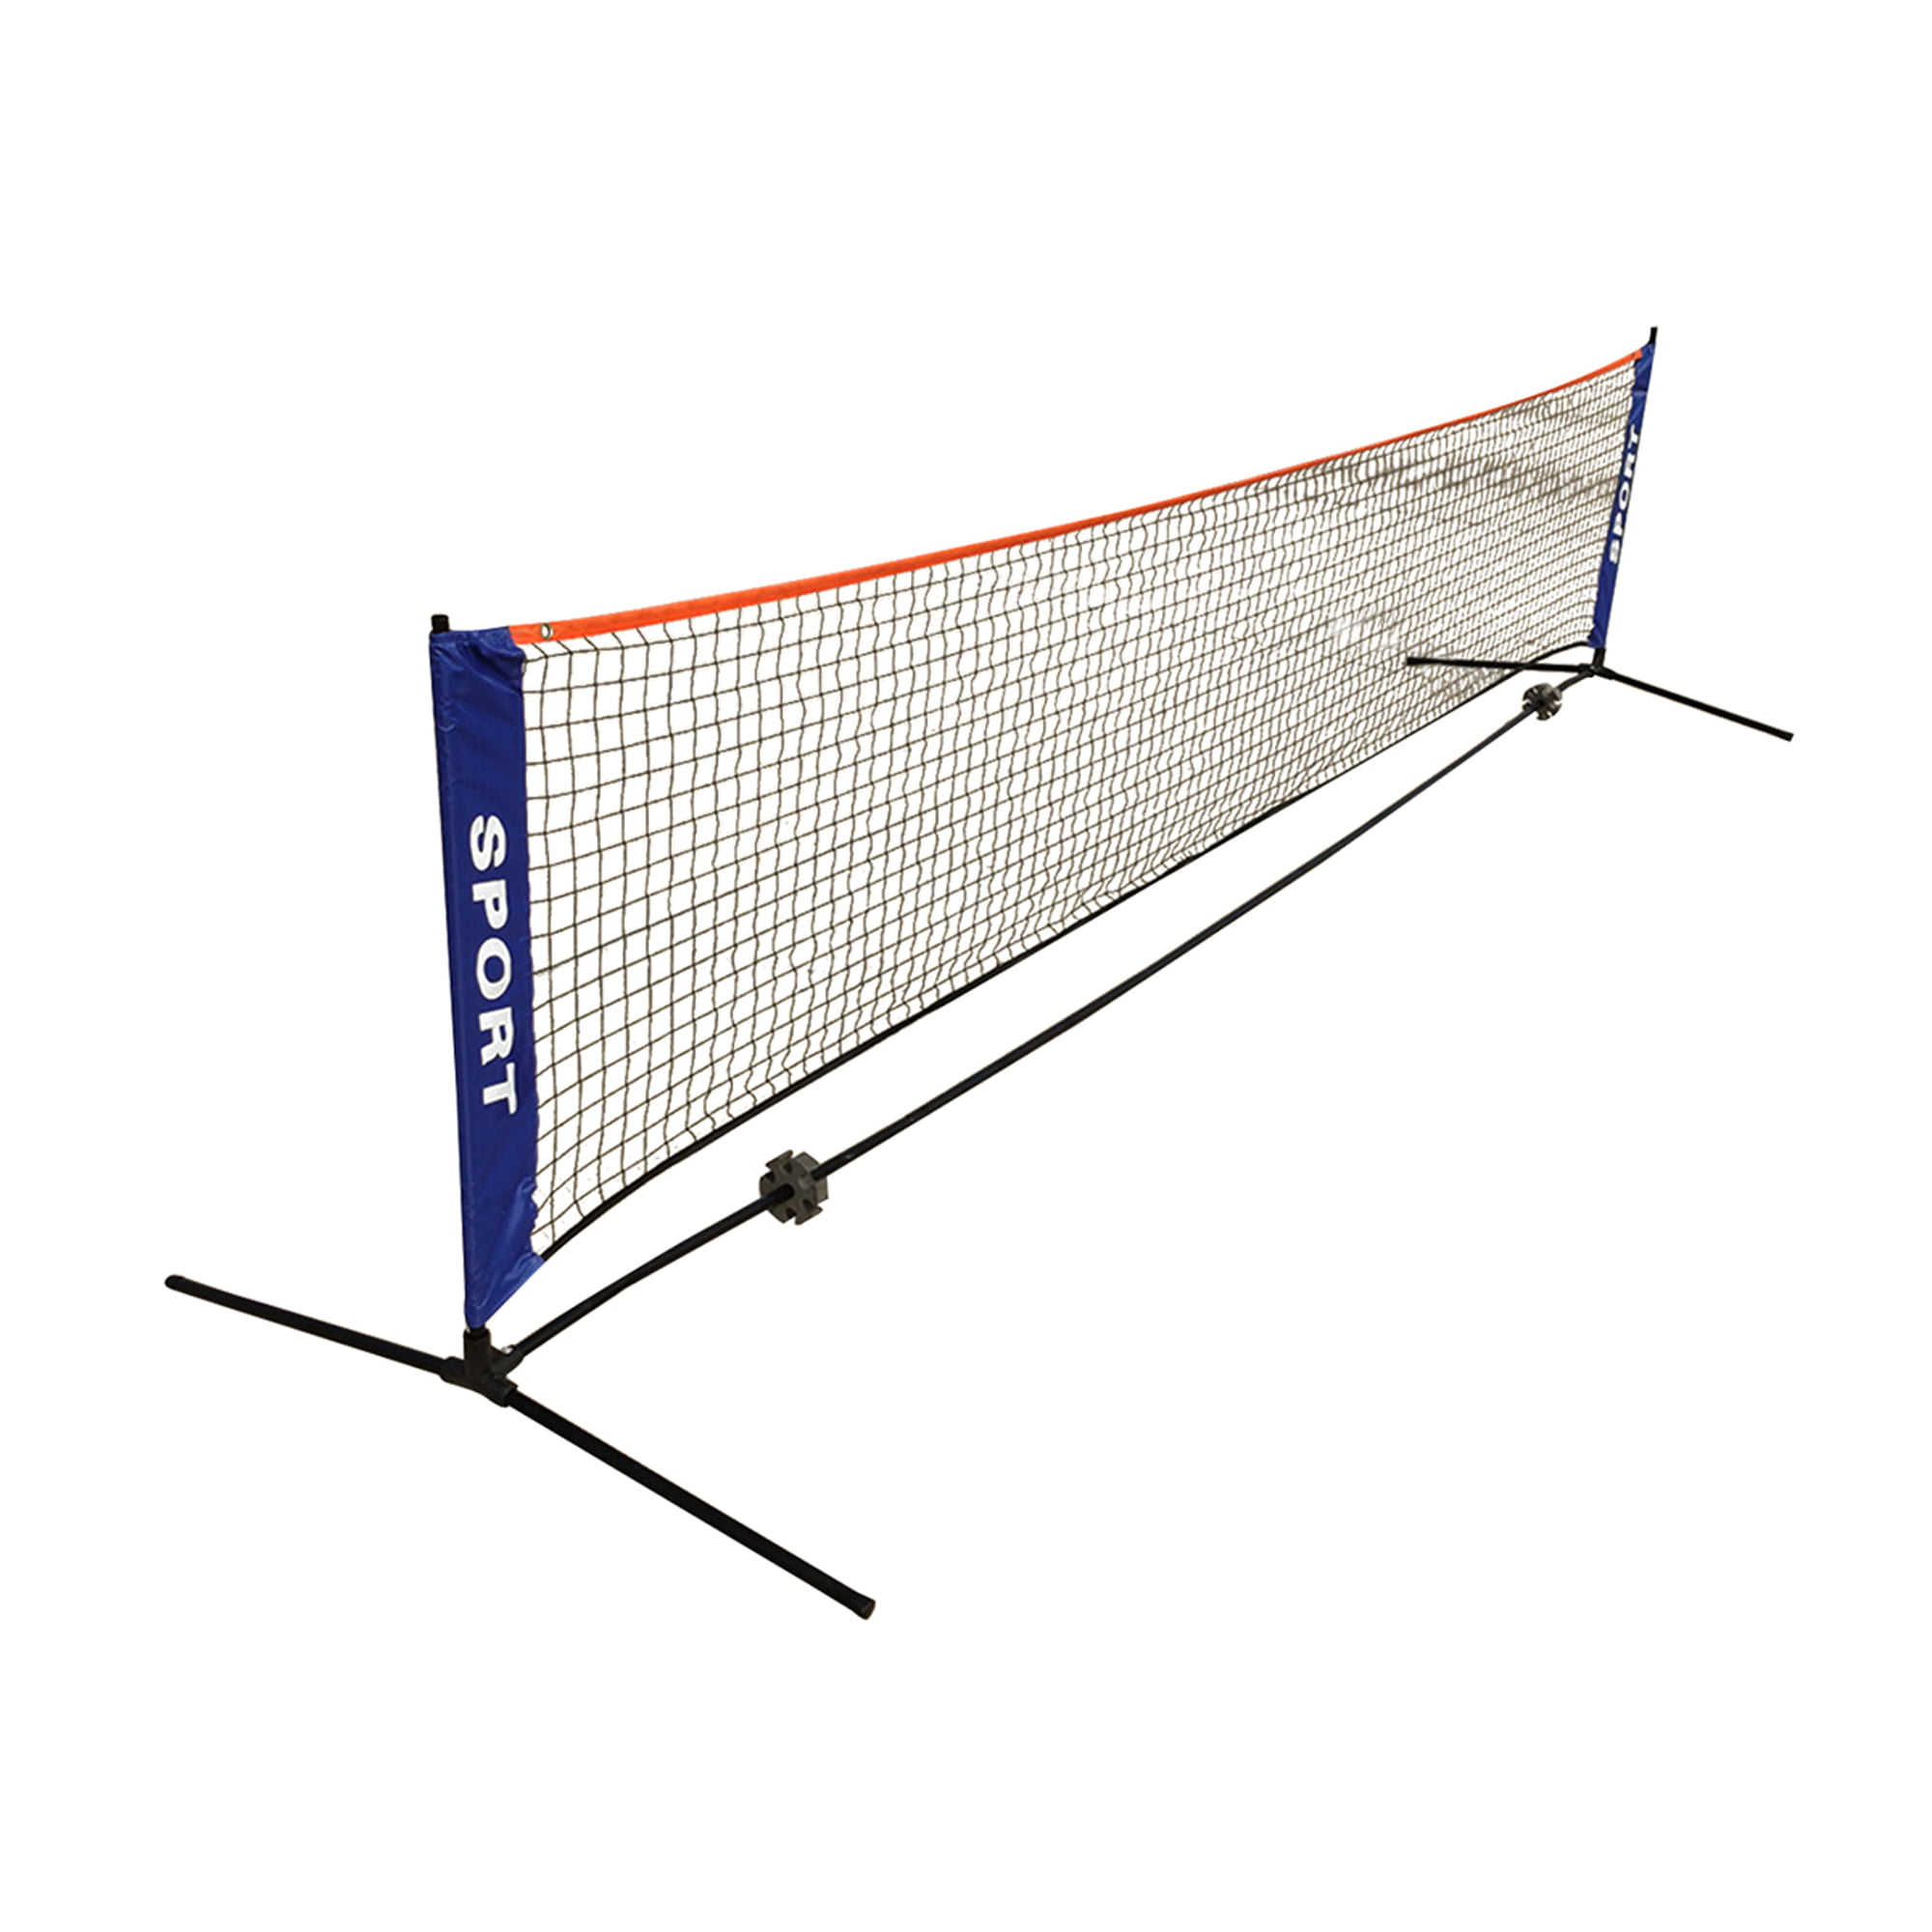 Details about   Backyard Sport Training Foldable Portable Badminton Tennis Net Standard Driveway 